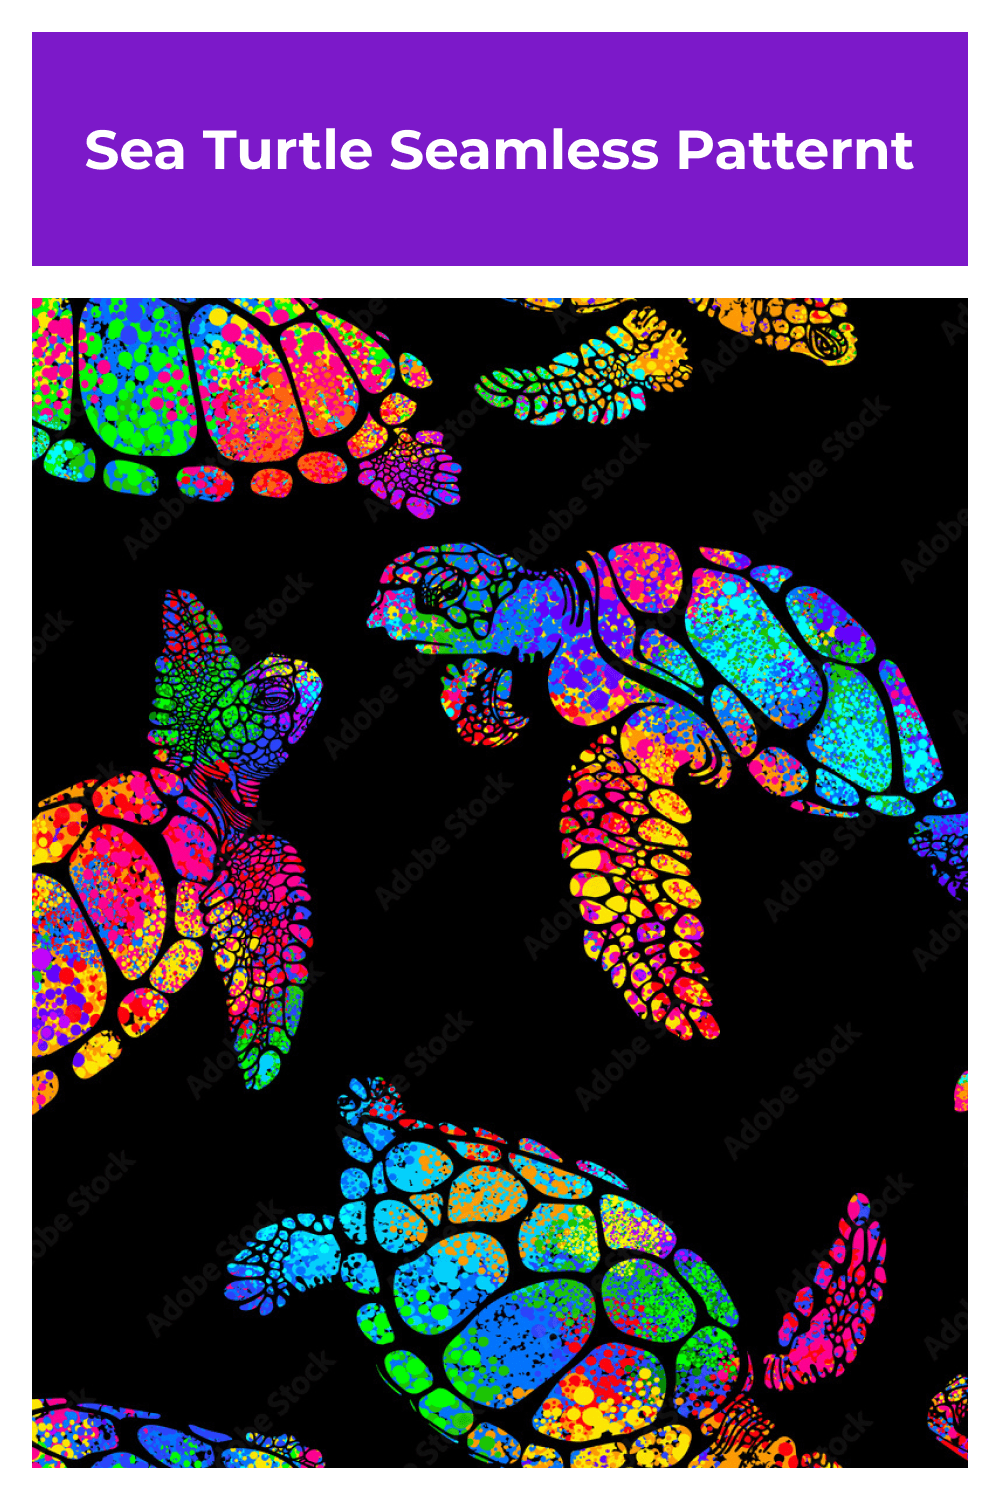 Very beautiful and creative turtles.